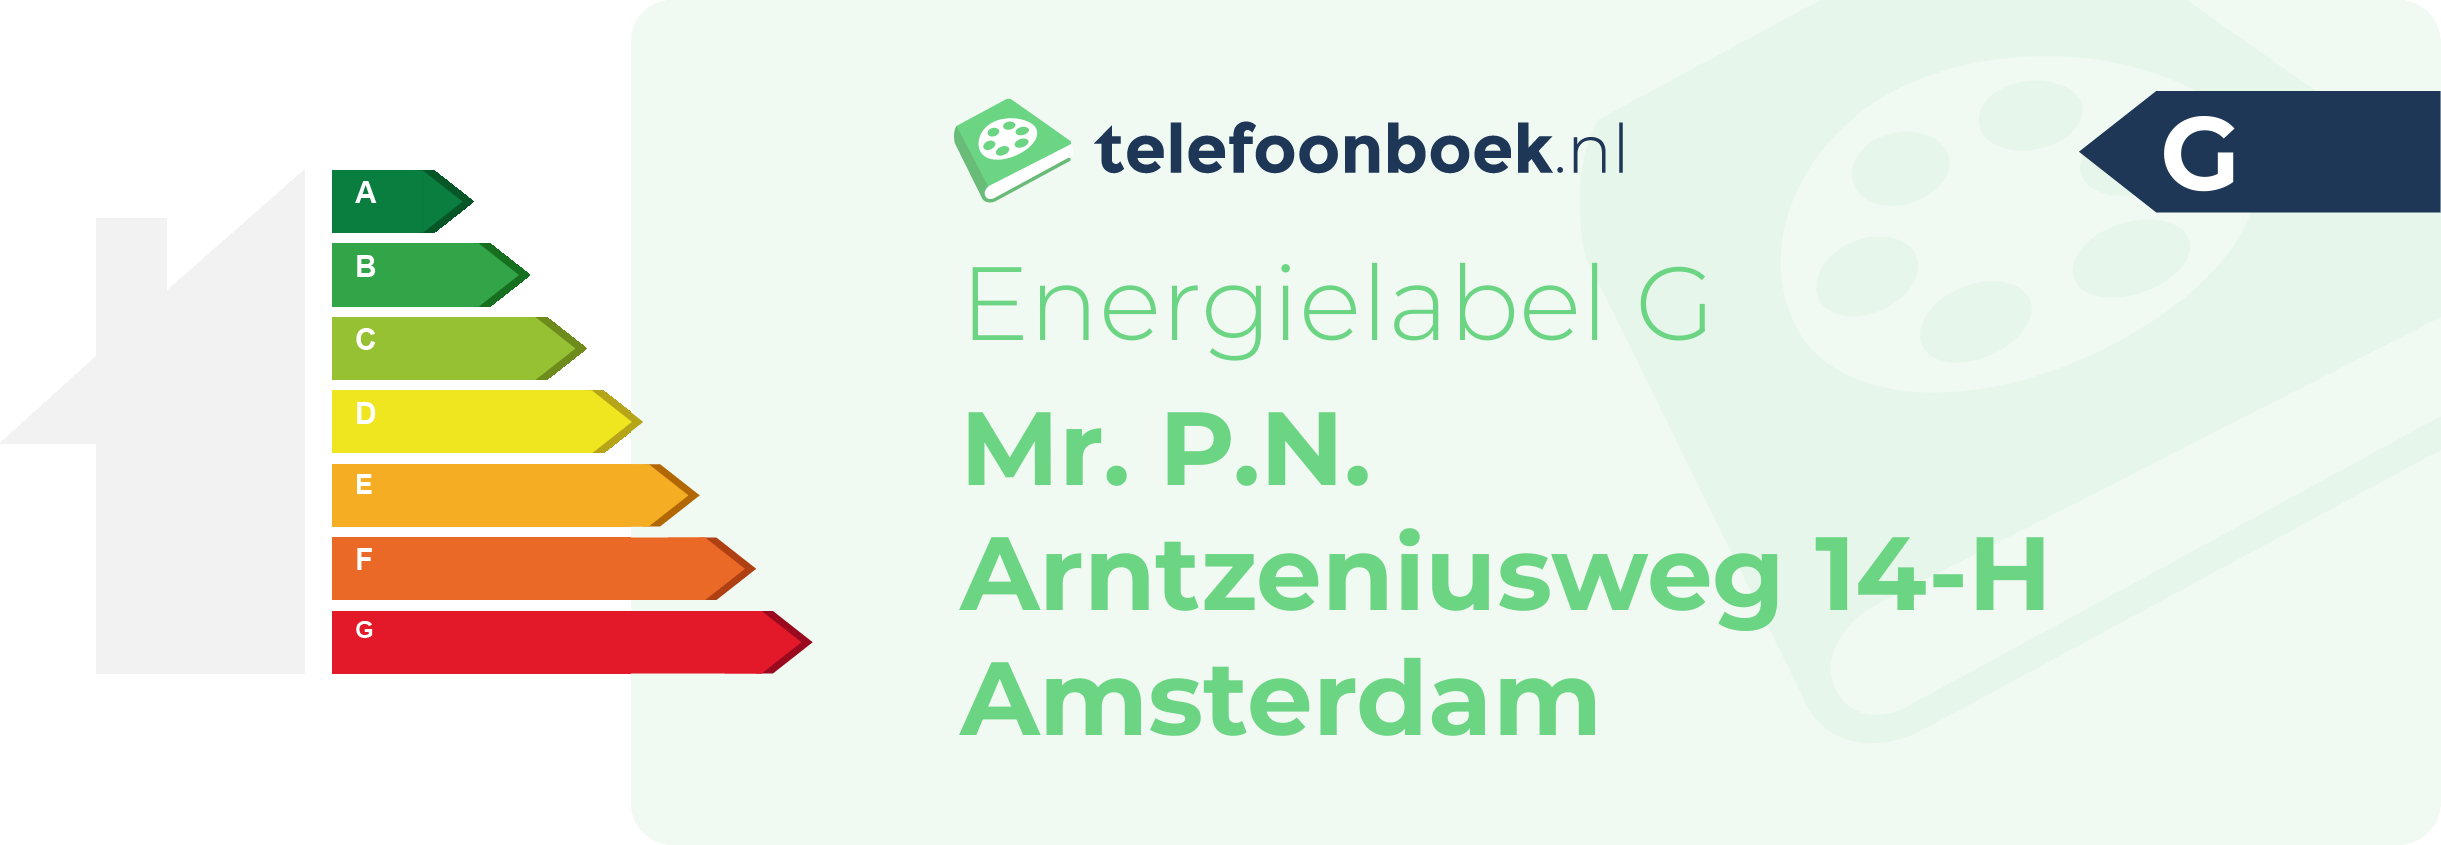 Energielabel Mr. P.N. Arntzeniusweg 14-H Amsterdam